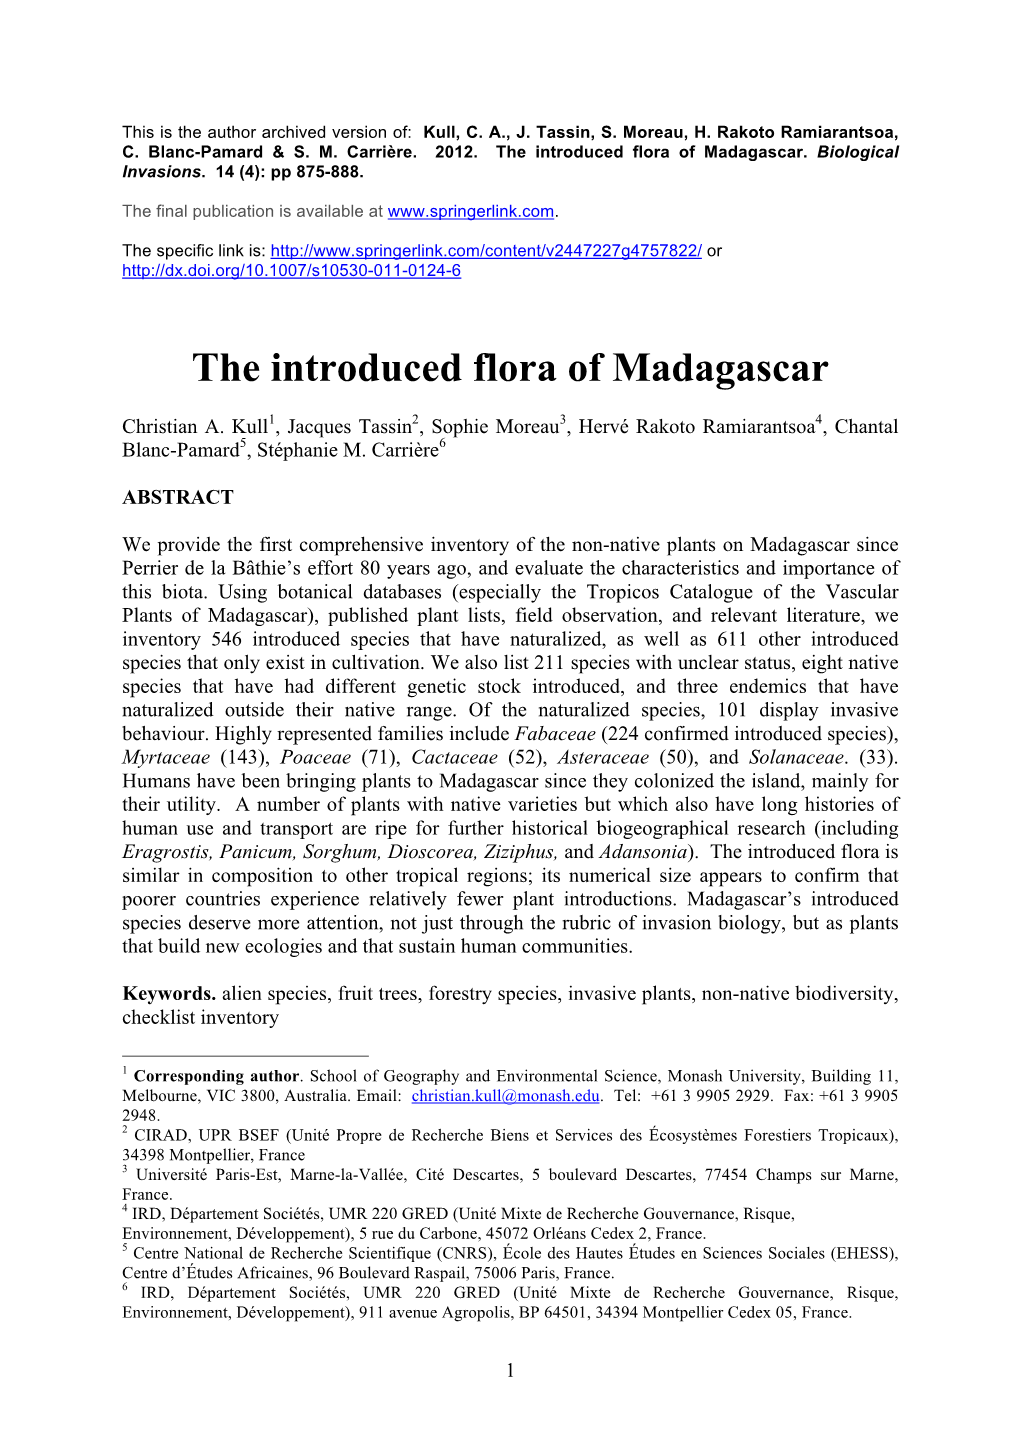 The Introduced Flora of Madagascar